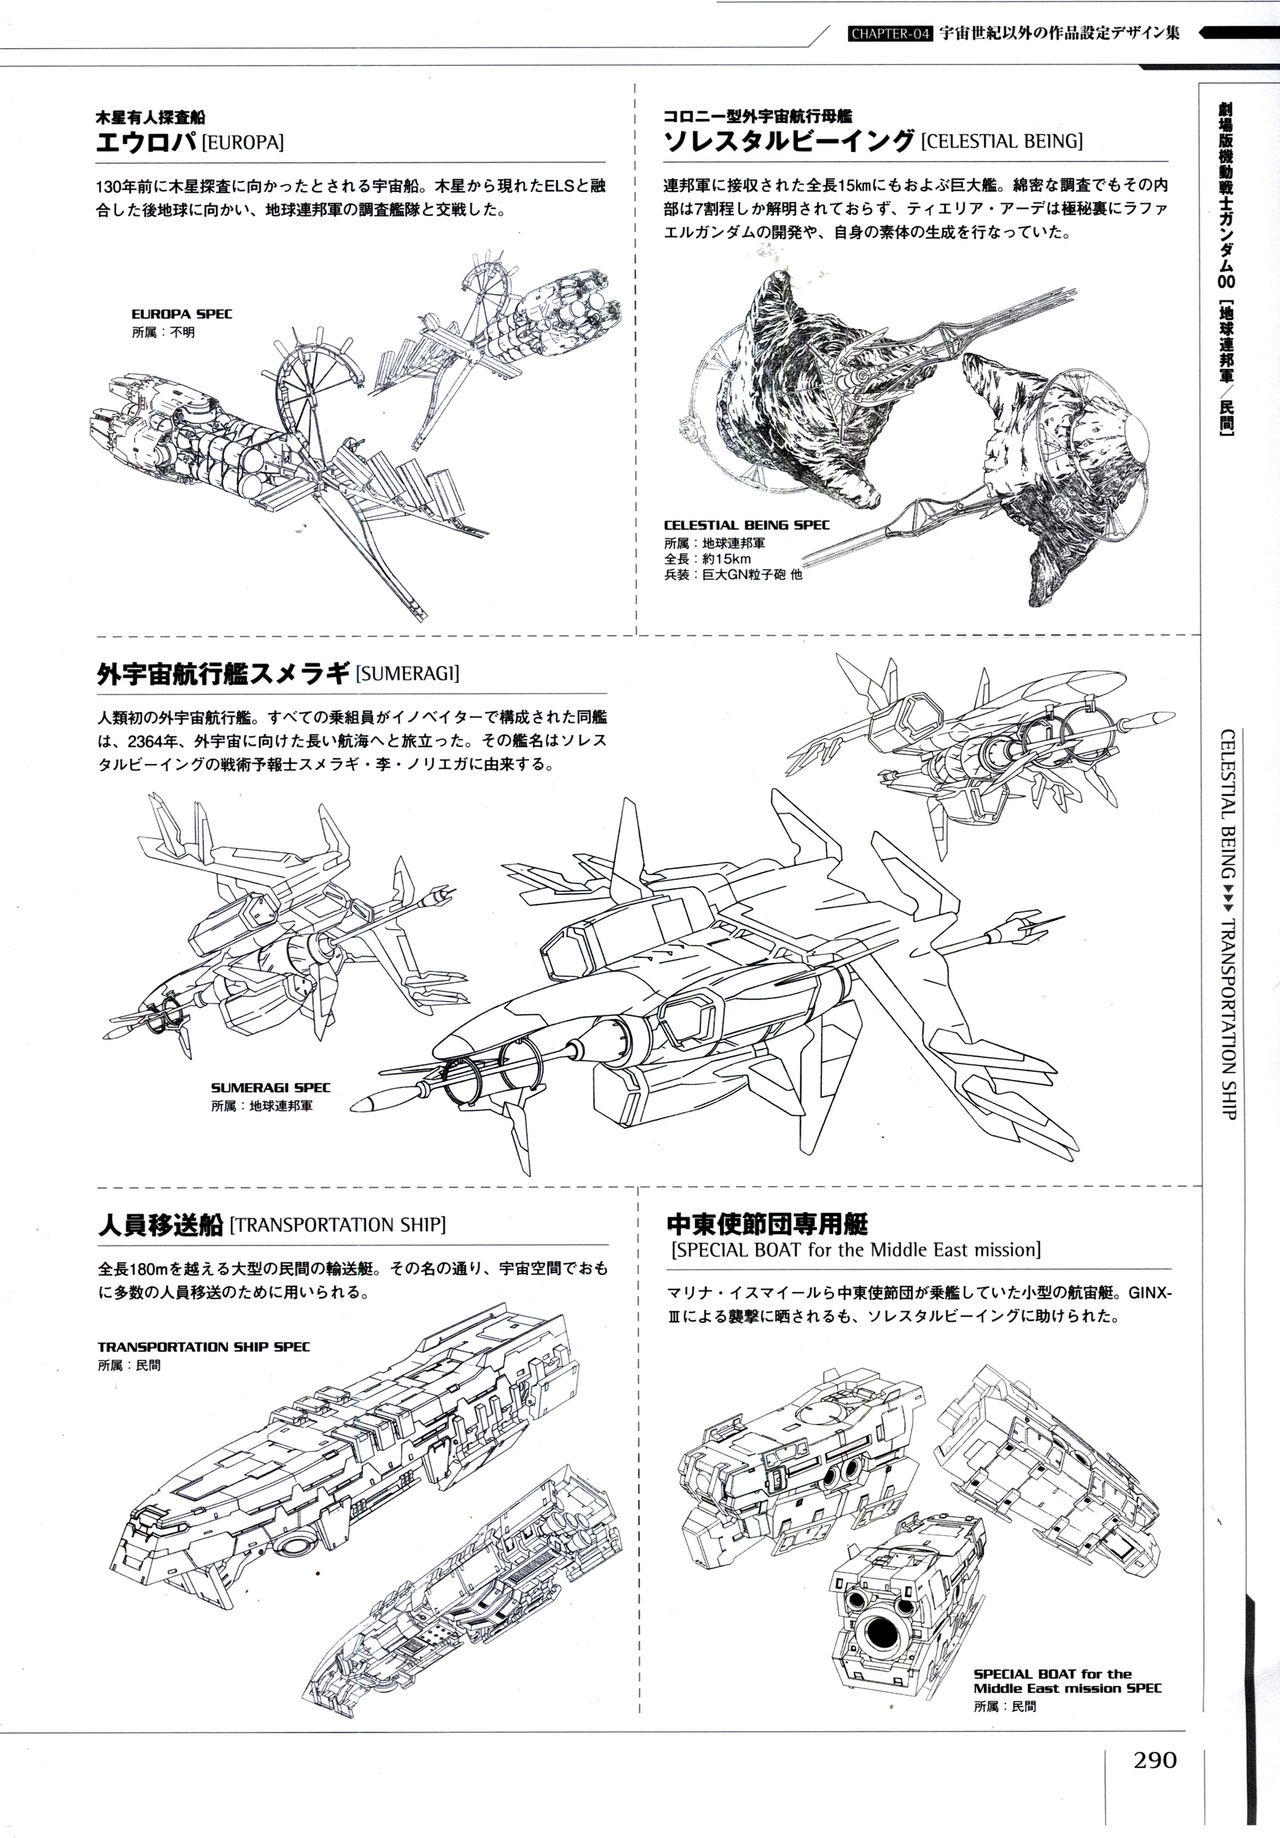 Mobile Suit Gundam - Ship & Aerospace Plane Encyclopedia - Revised Edition 295